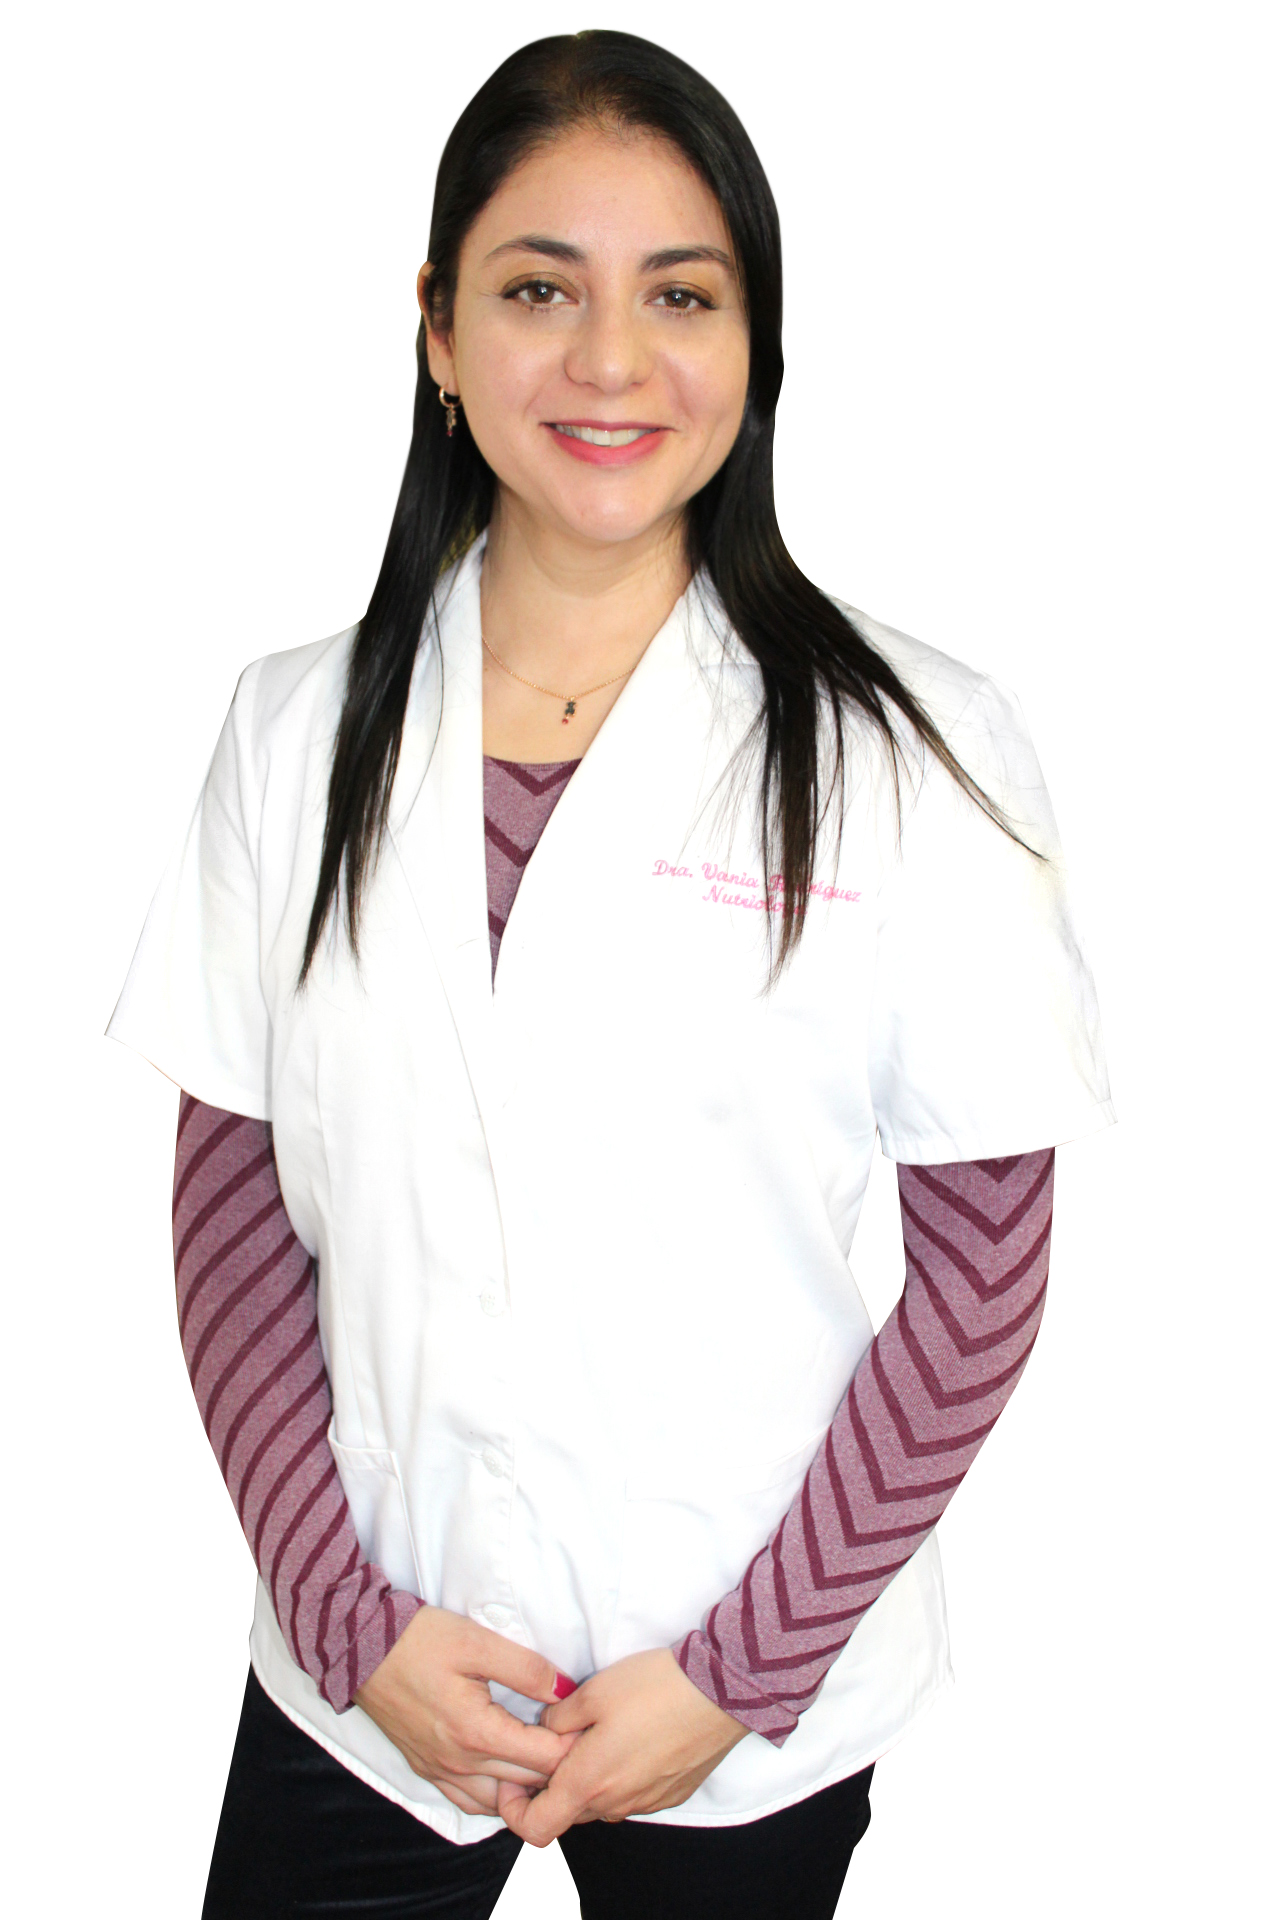 Dra. Vania Rodriguez